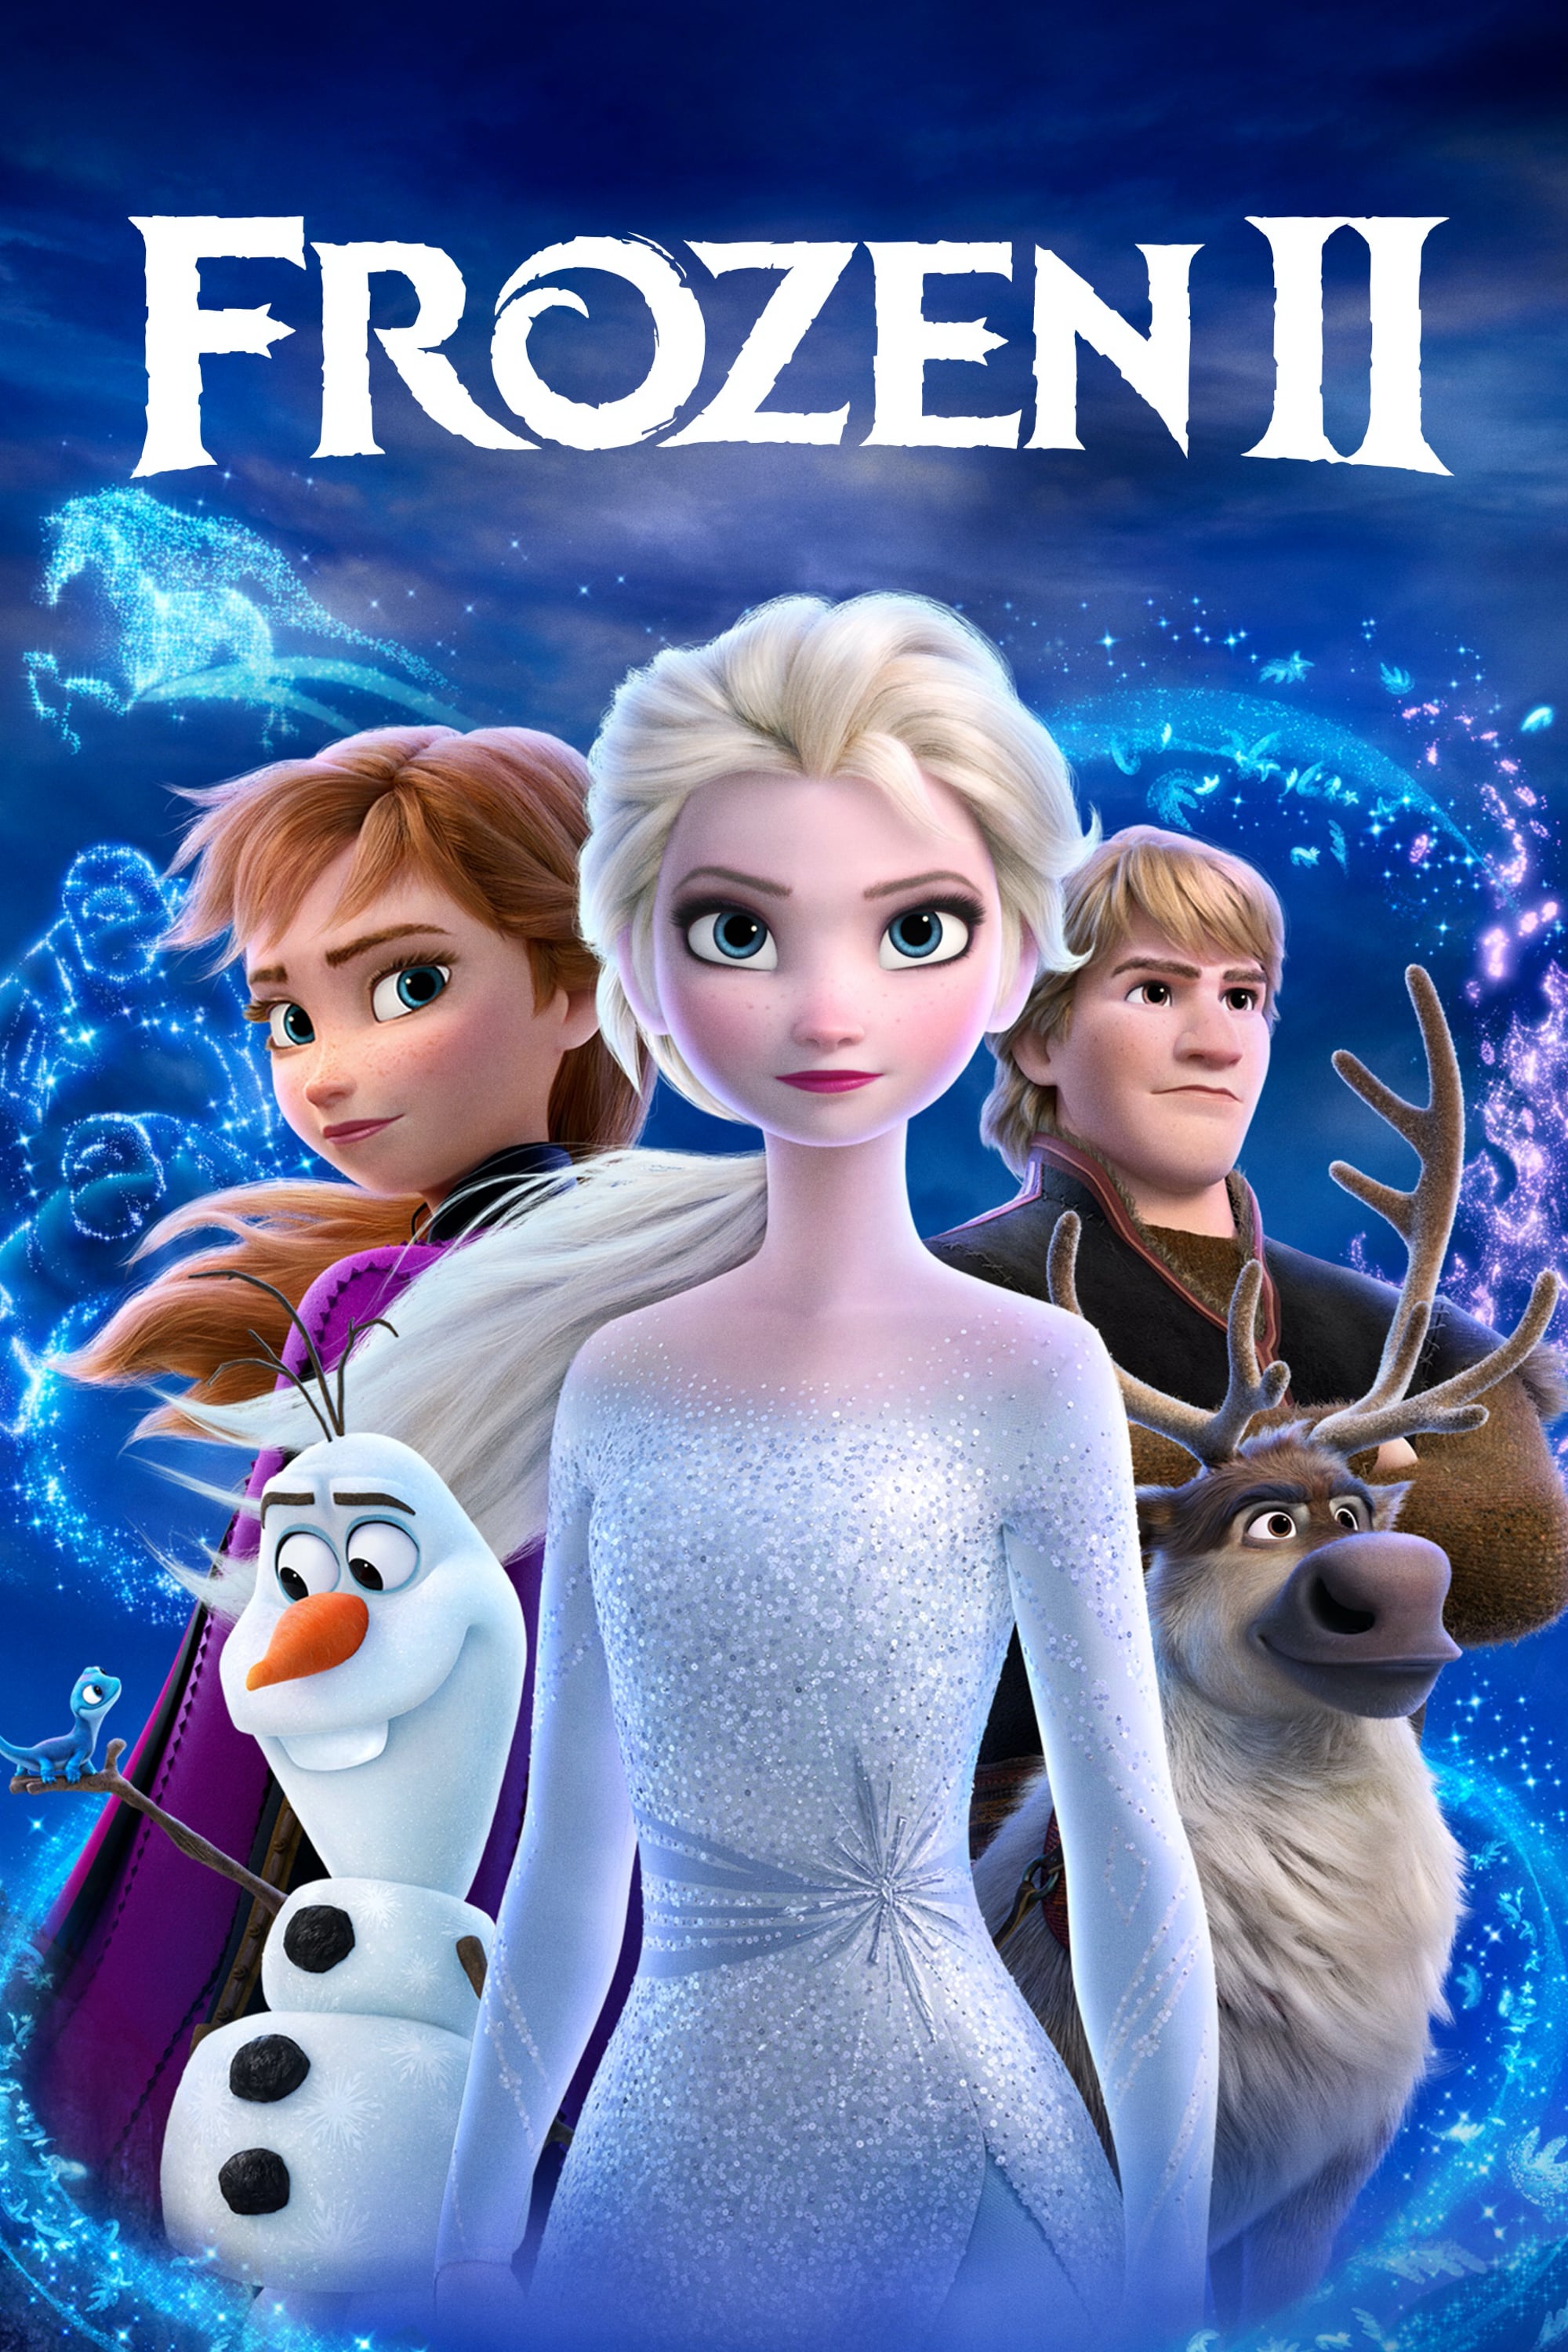 Frozen 2 - O Reino Gelado